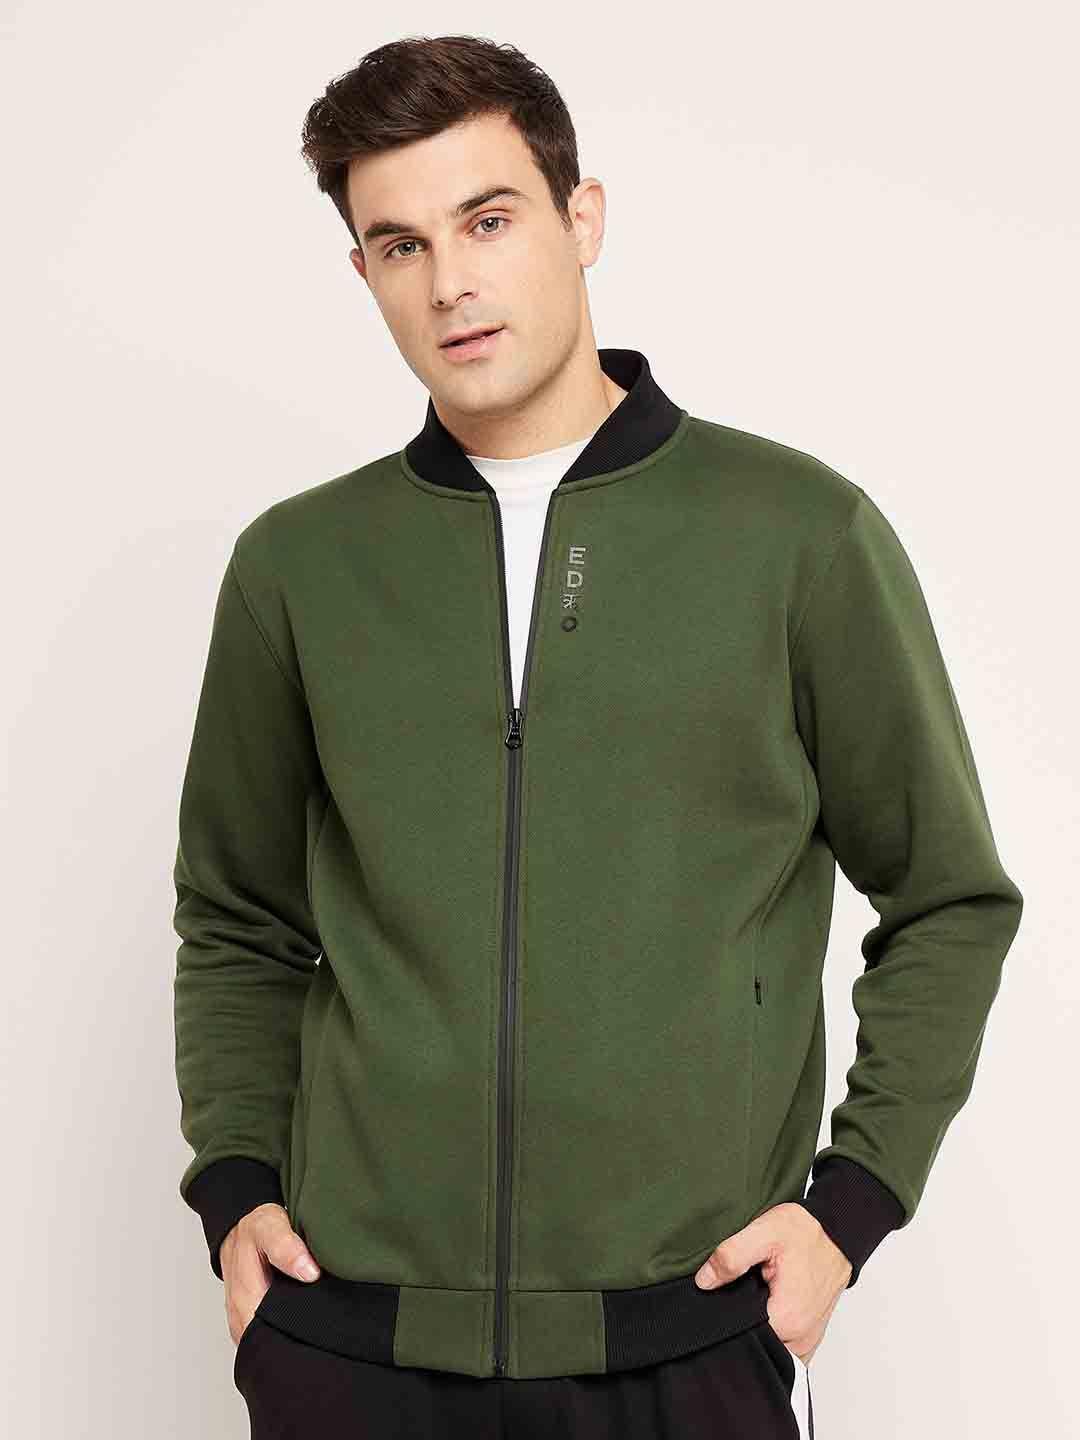 edrio-mandarin-collar-long-sleeves-casual-sweatshirt